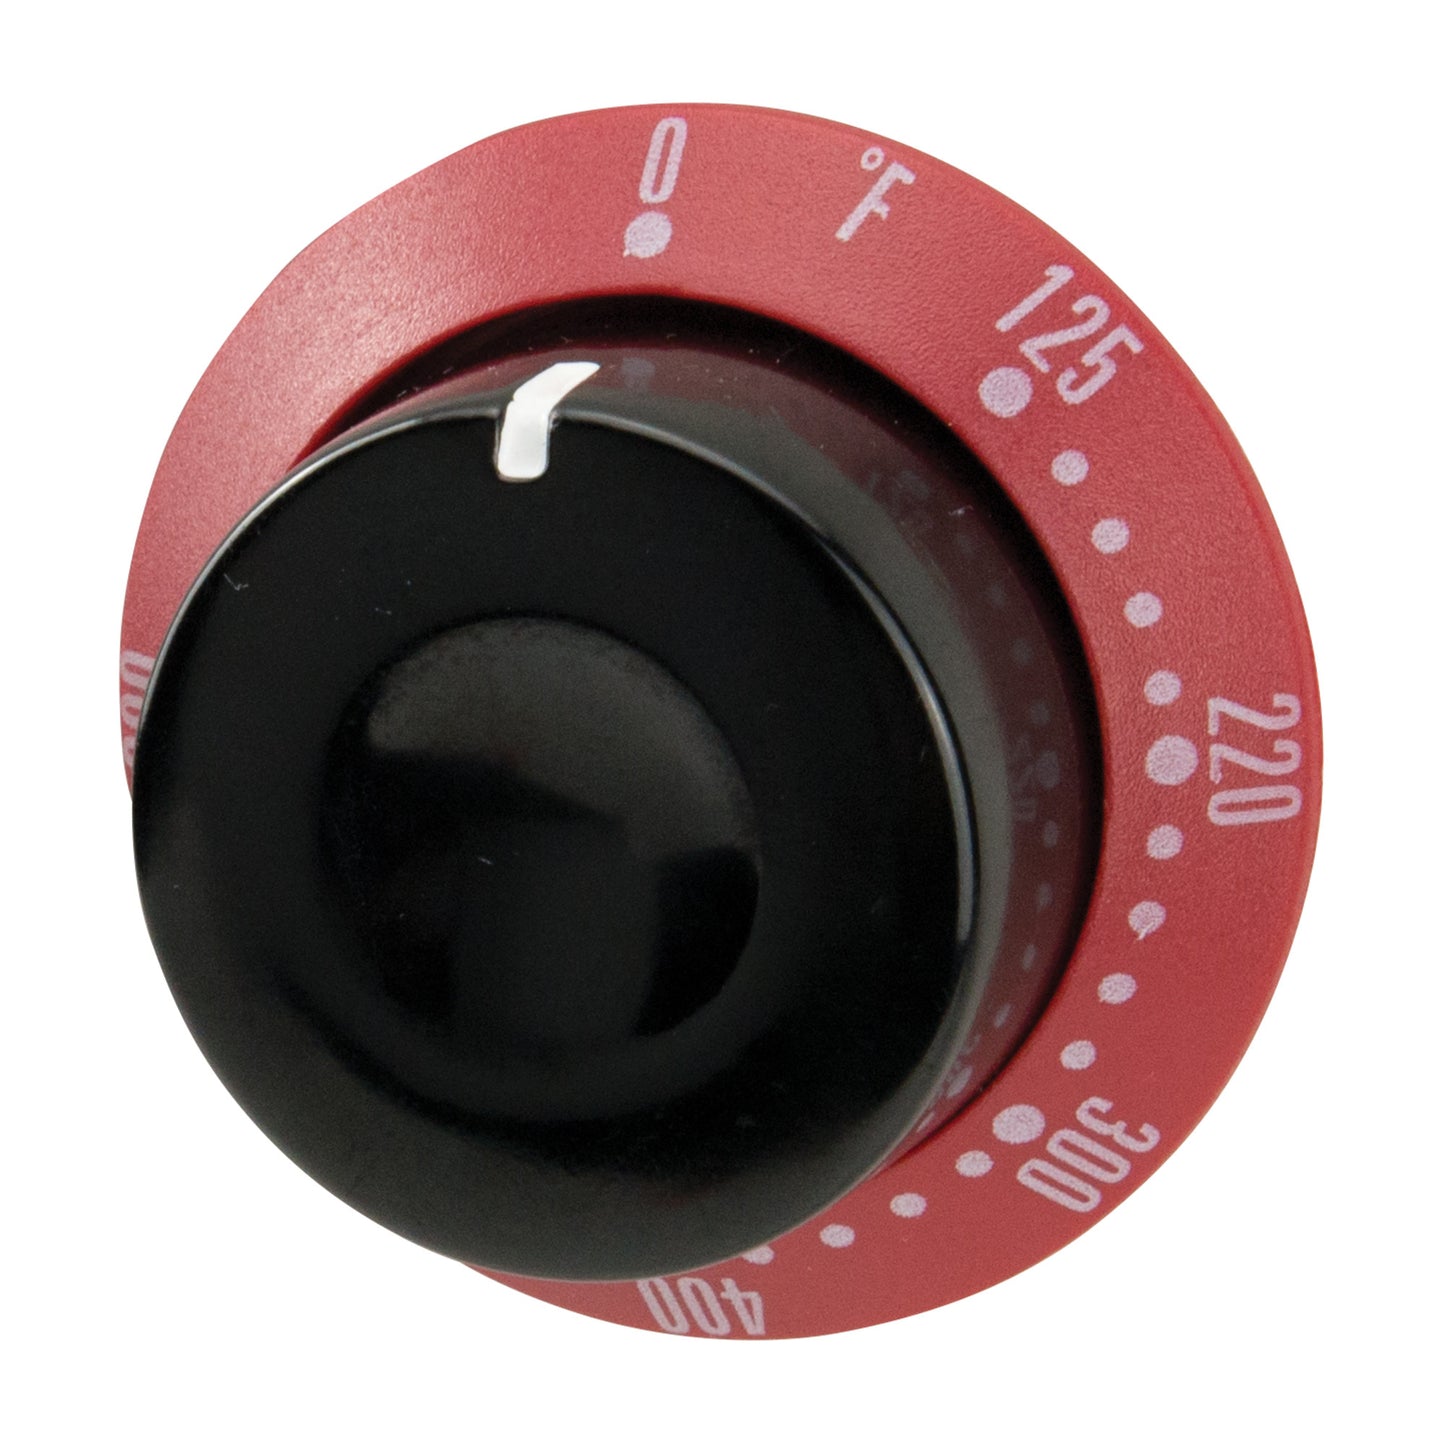 EPSG-P28 - Temperature Knob Insert, Includes Red Ring and Black Knob, for EPG-2,ESG,EPO-1